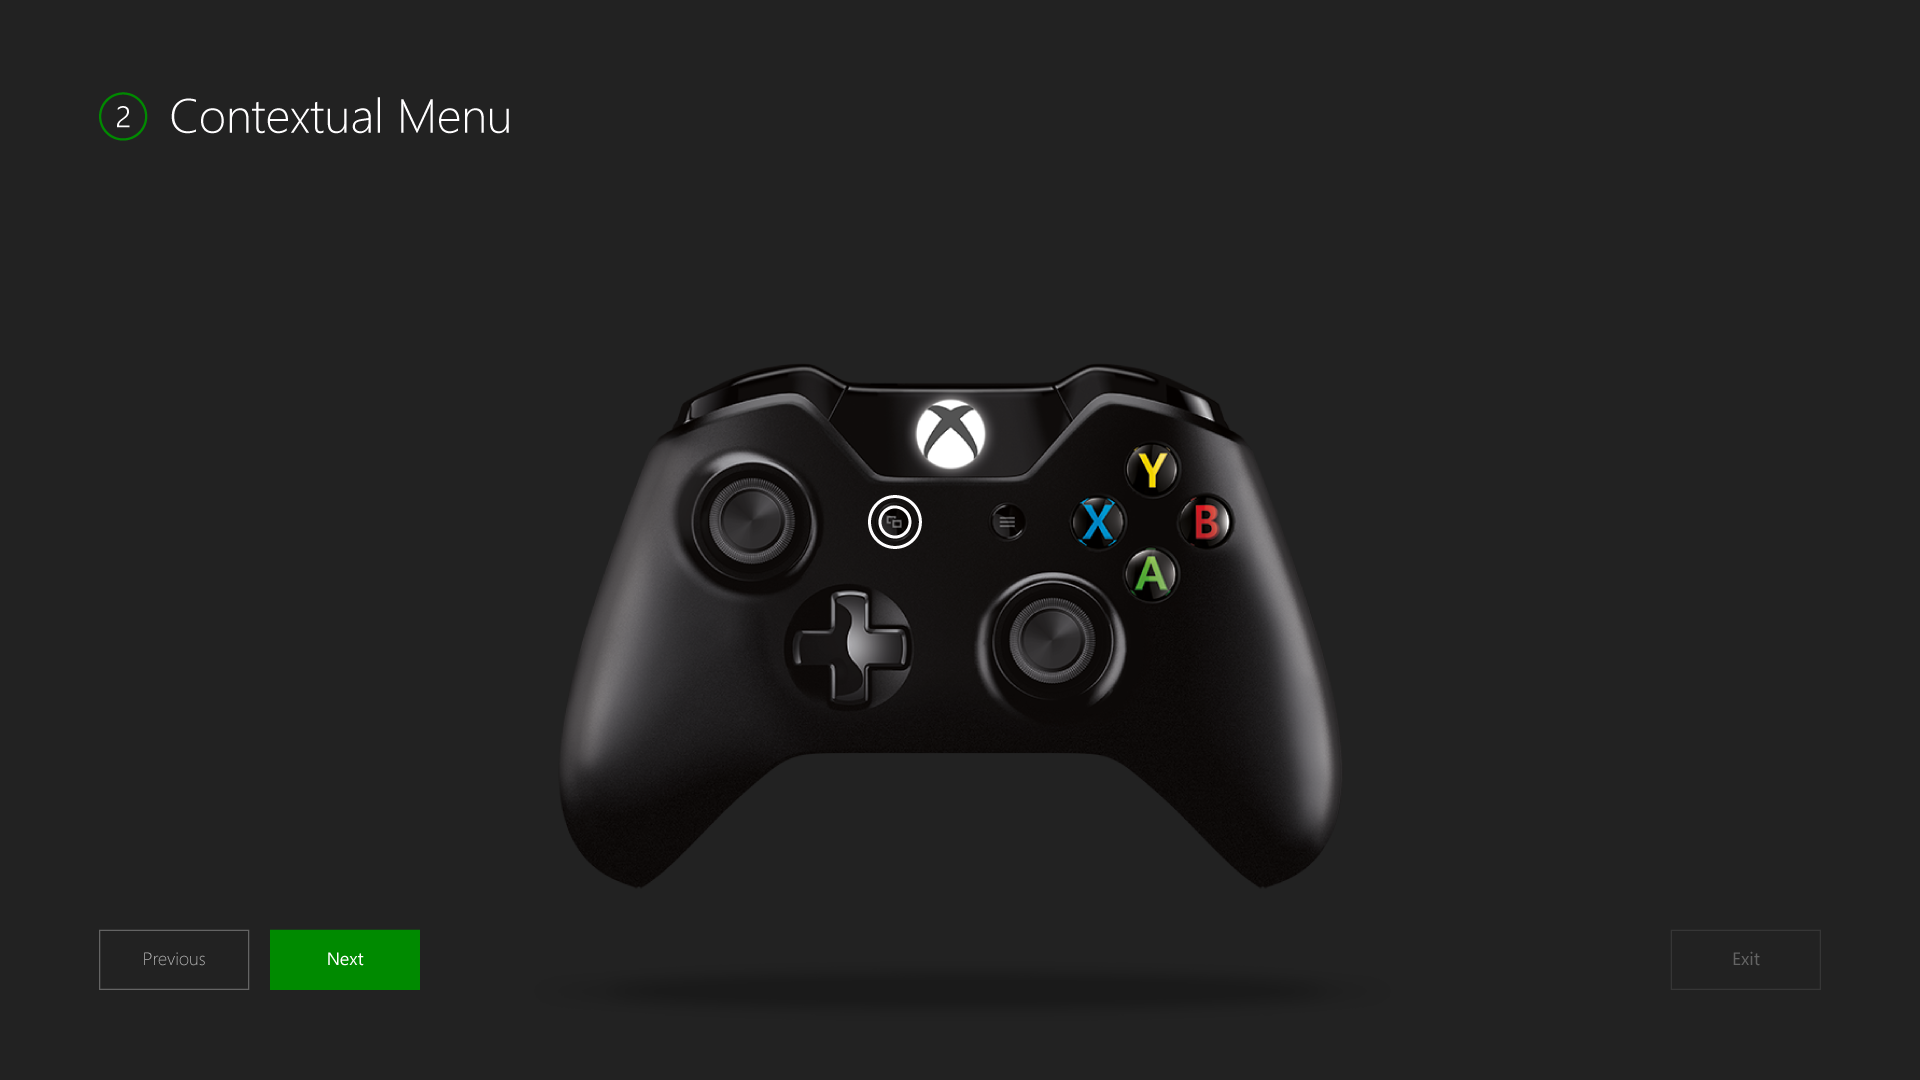 Xbox One Dev Home